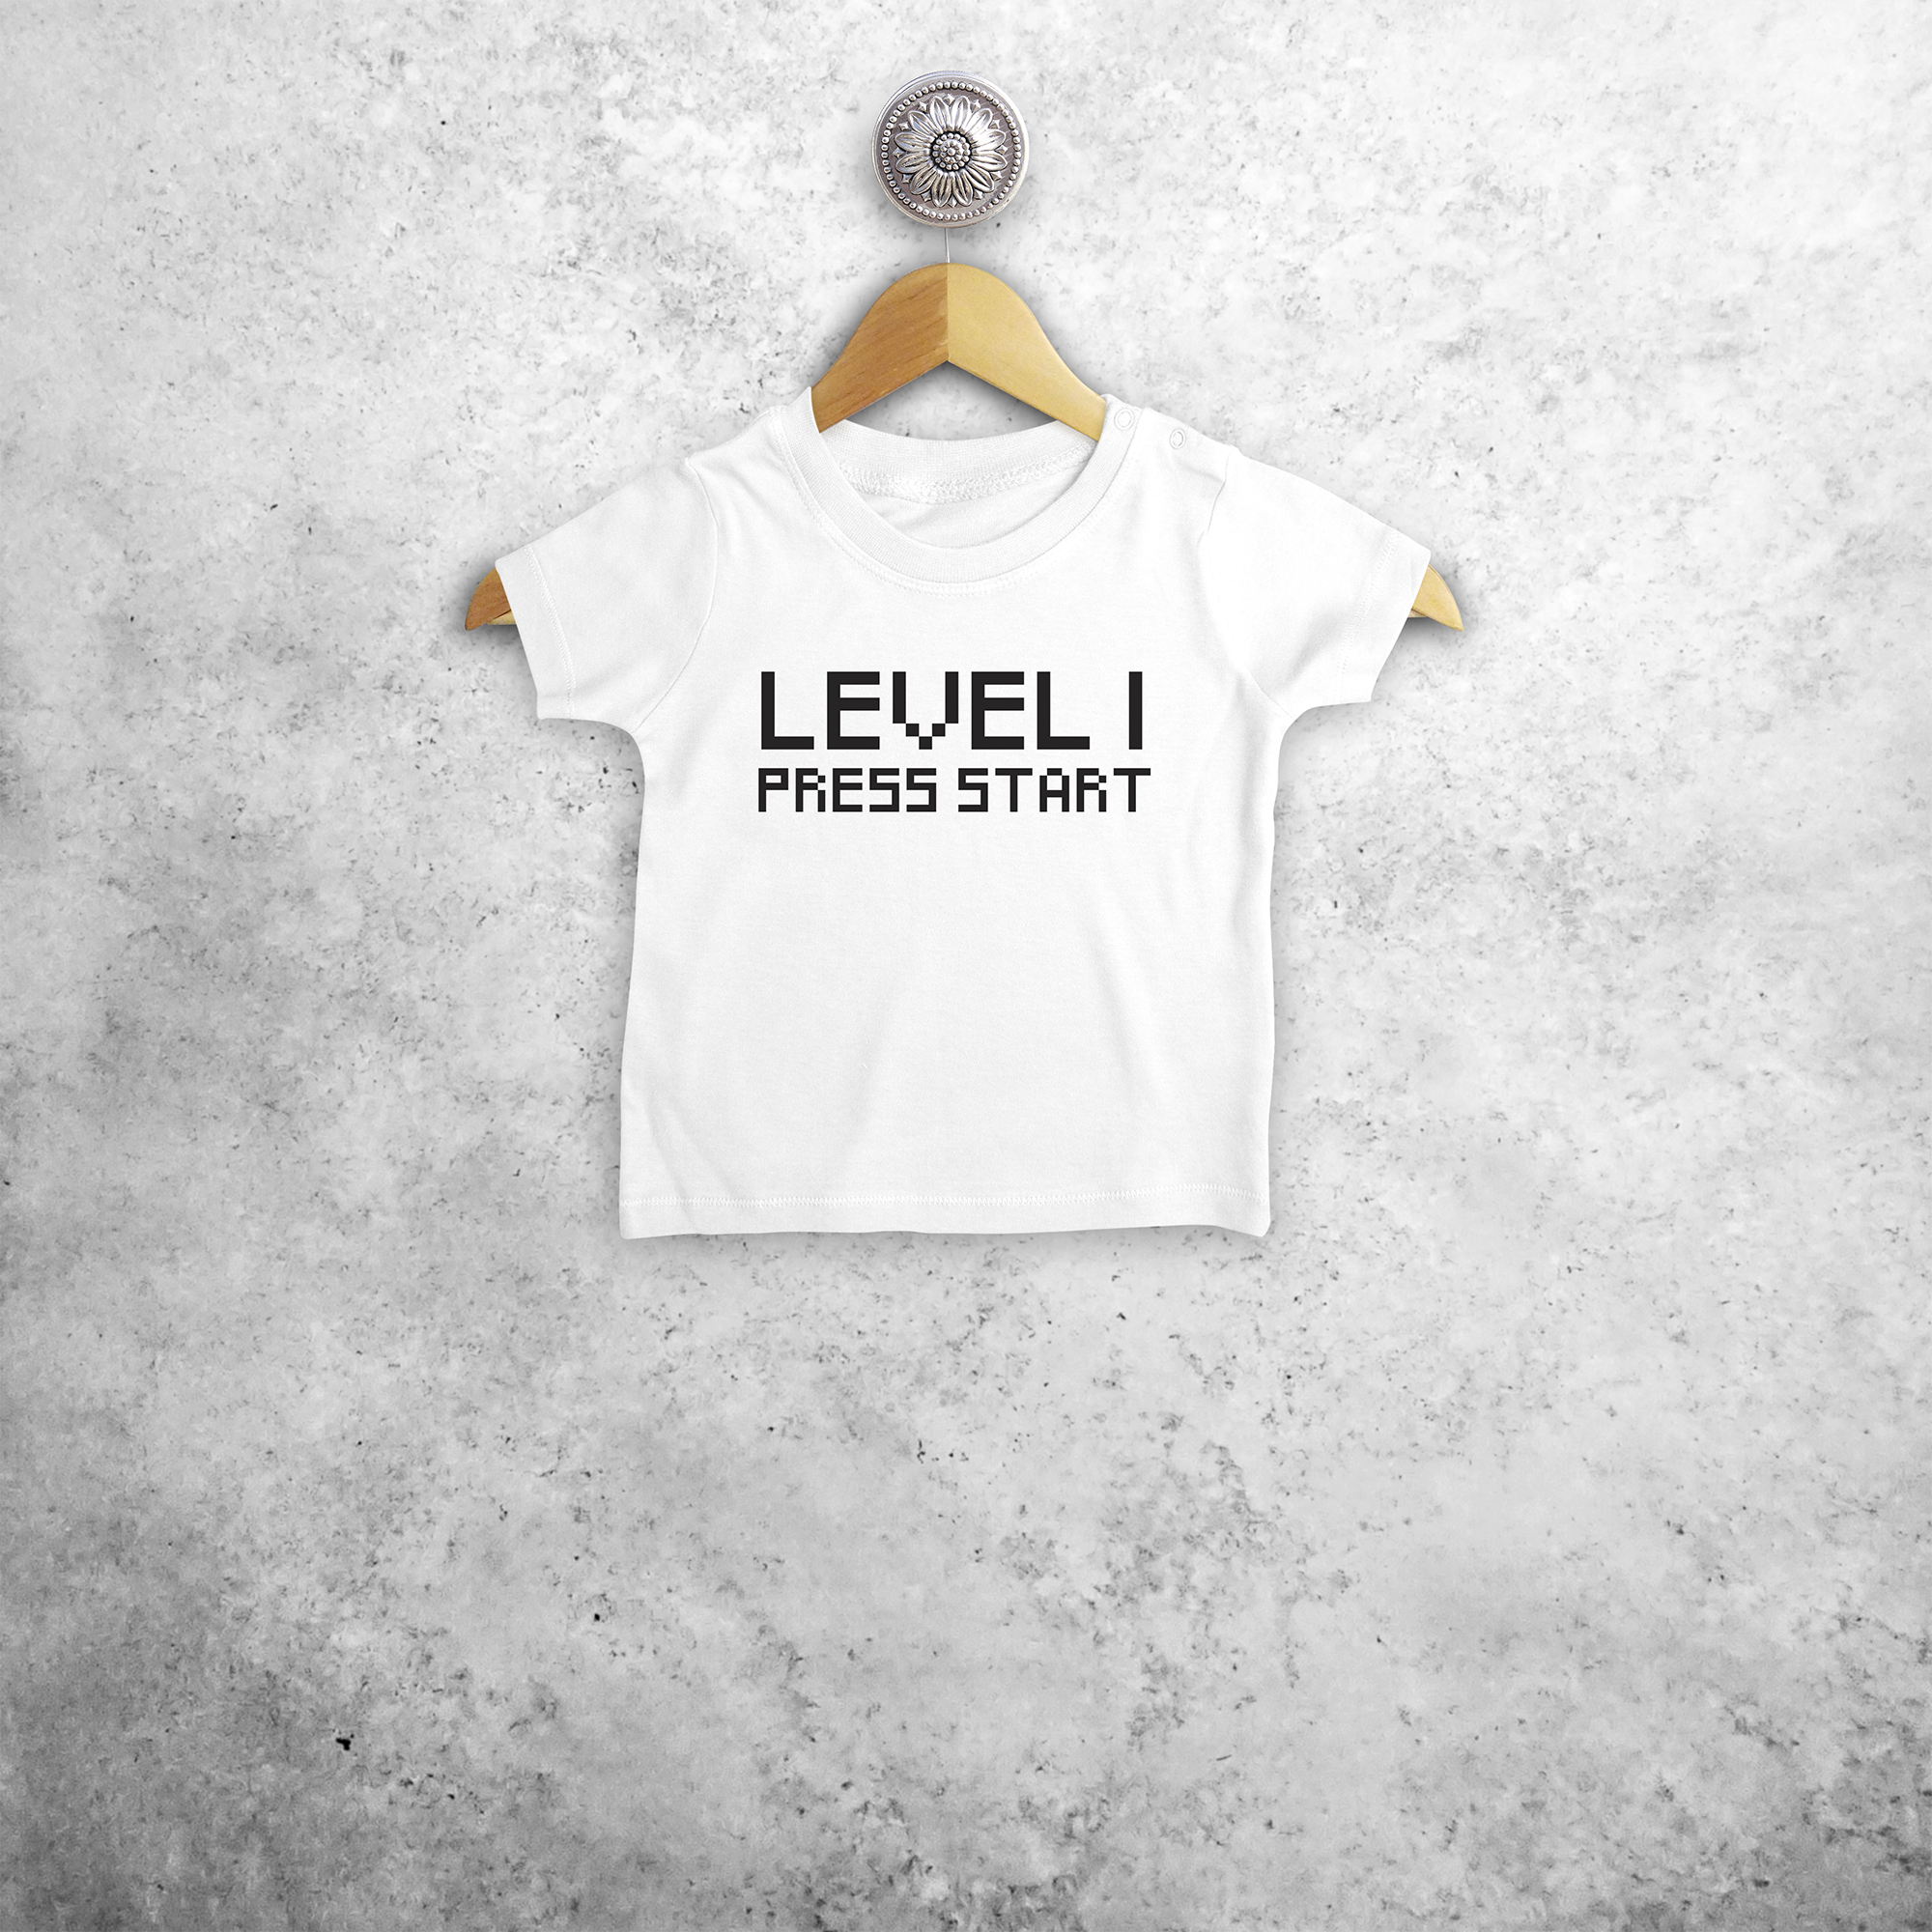 'Level... - Press start' baby shortsleeve shirt